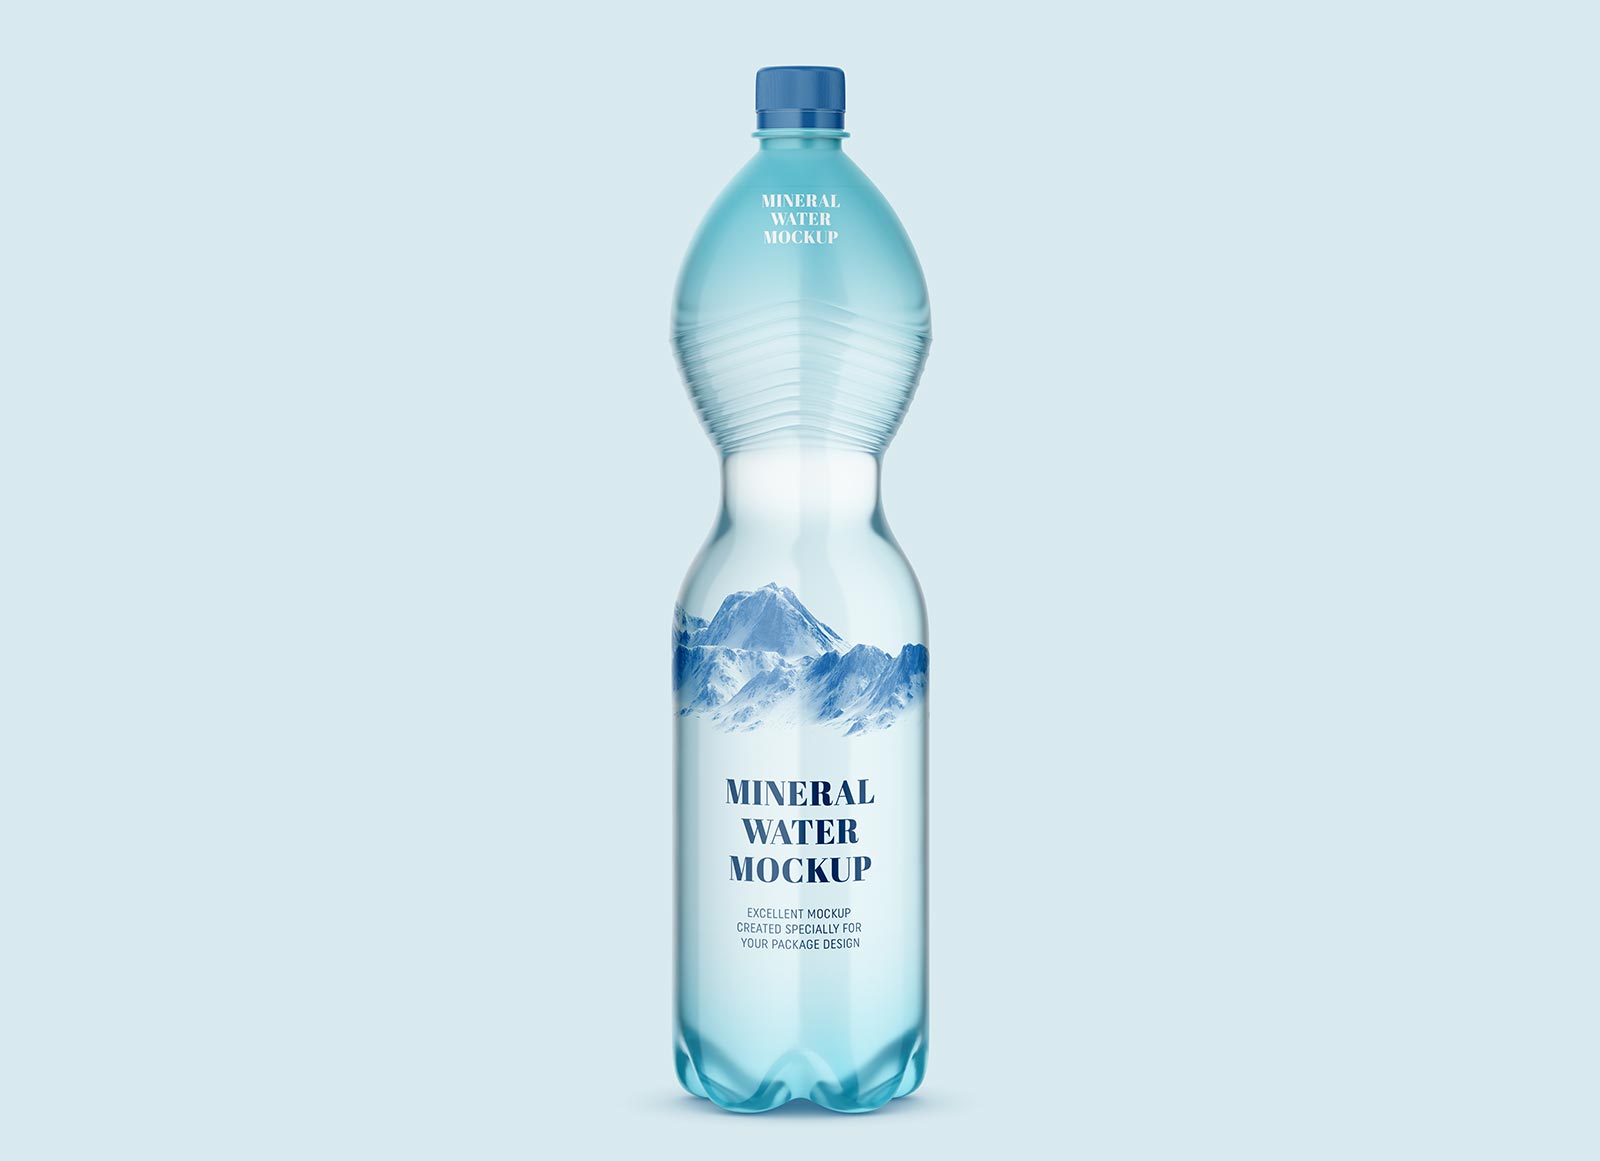 Mockup de botella de agua mineral de 1 litro